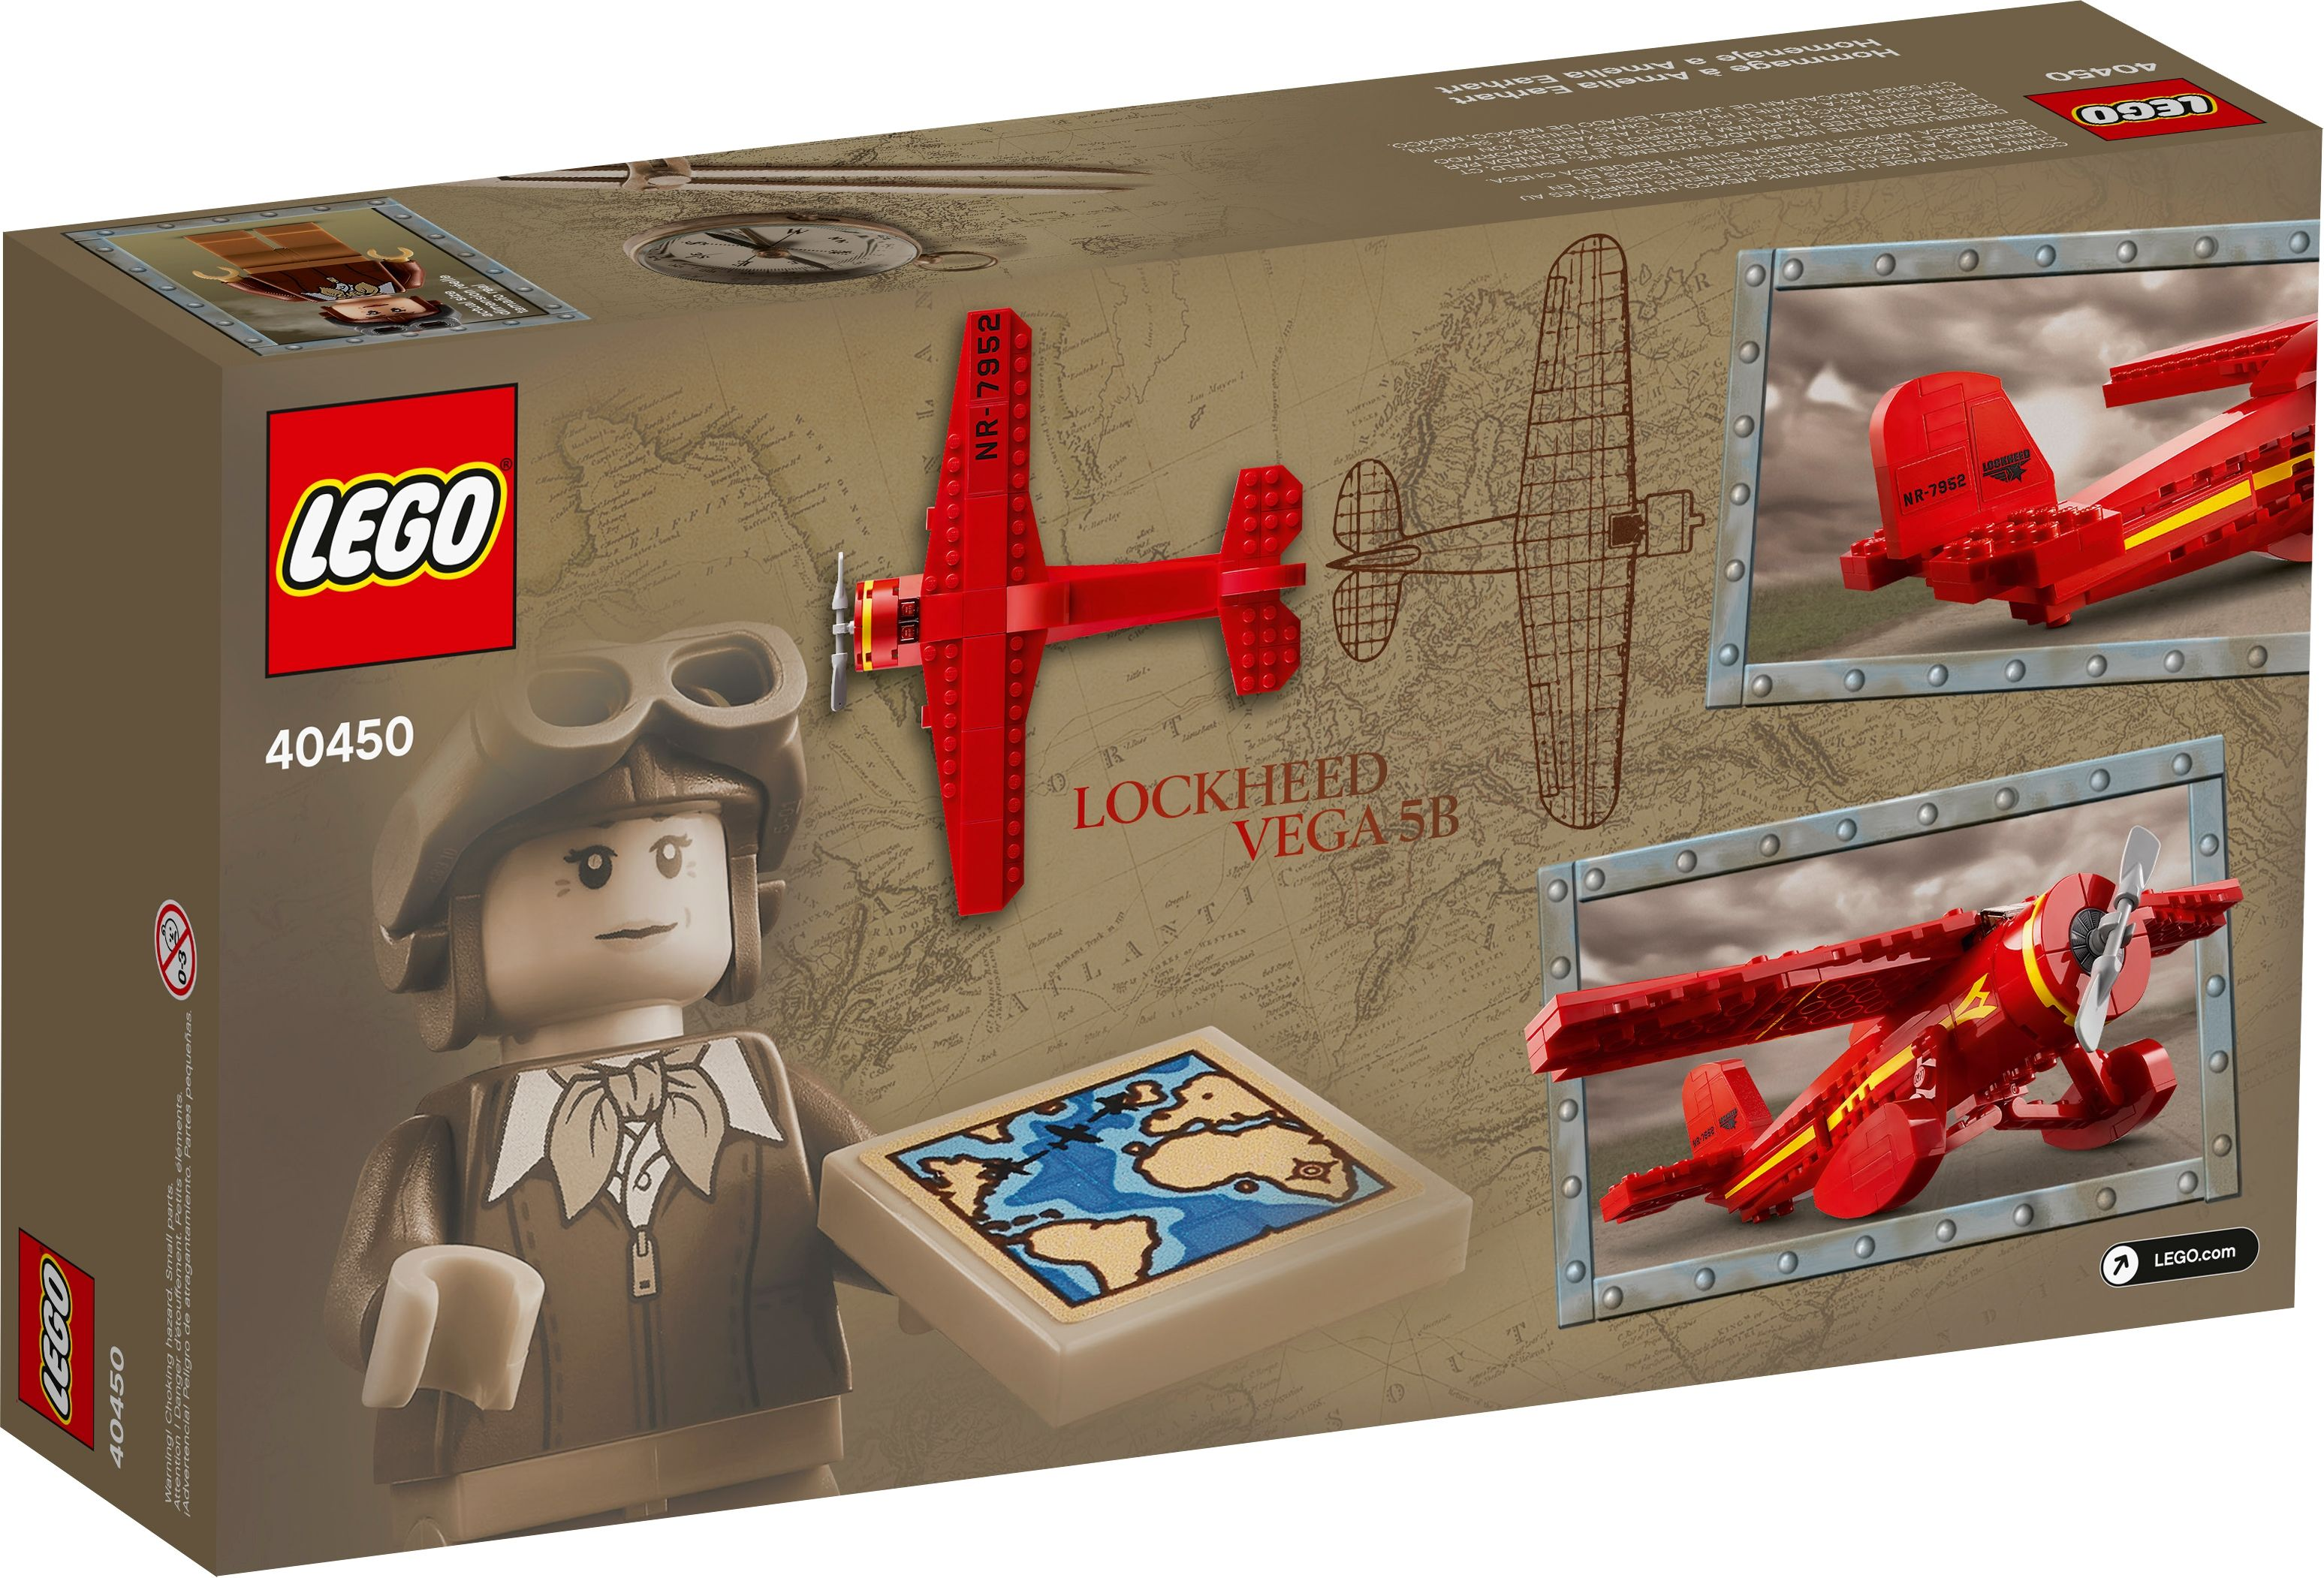 LEGO 40450 Hommage Amelia an Bausatz Earhart